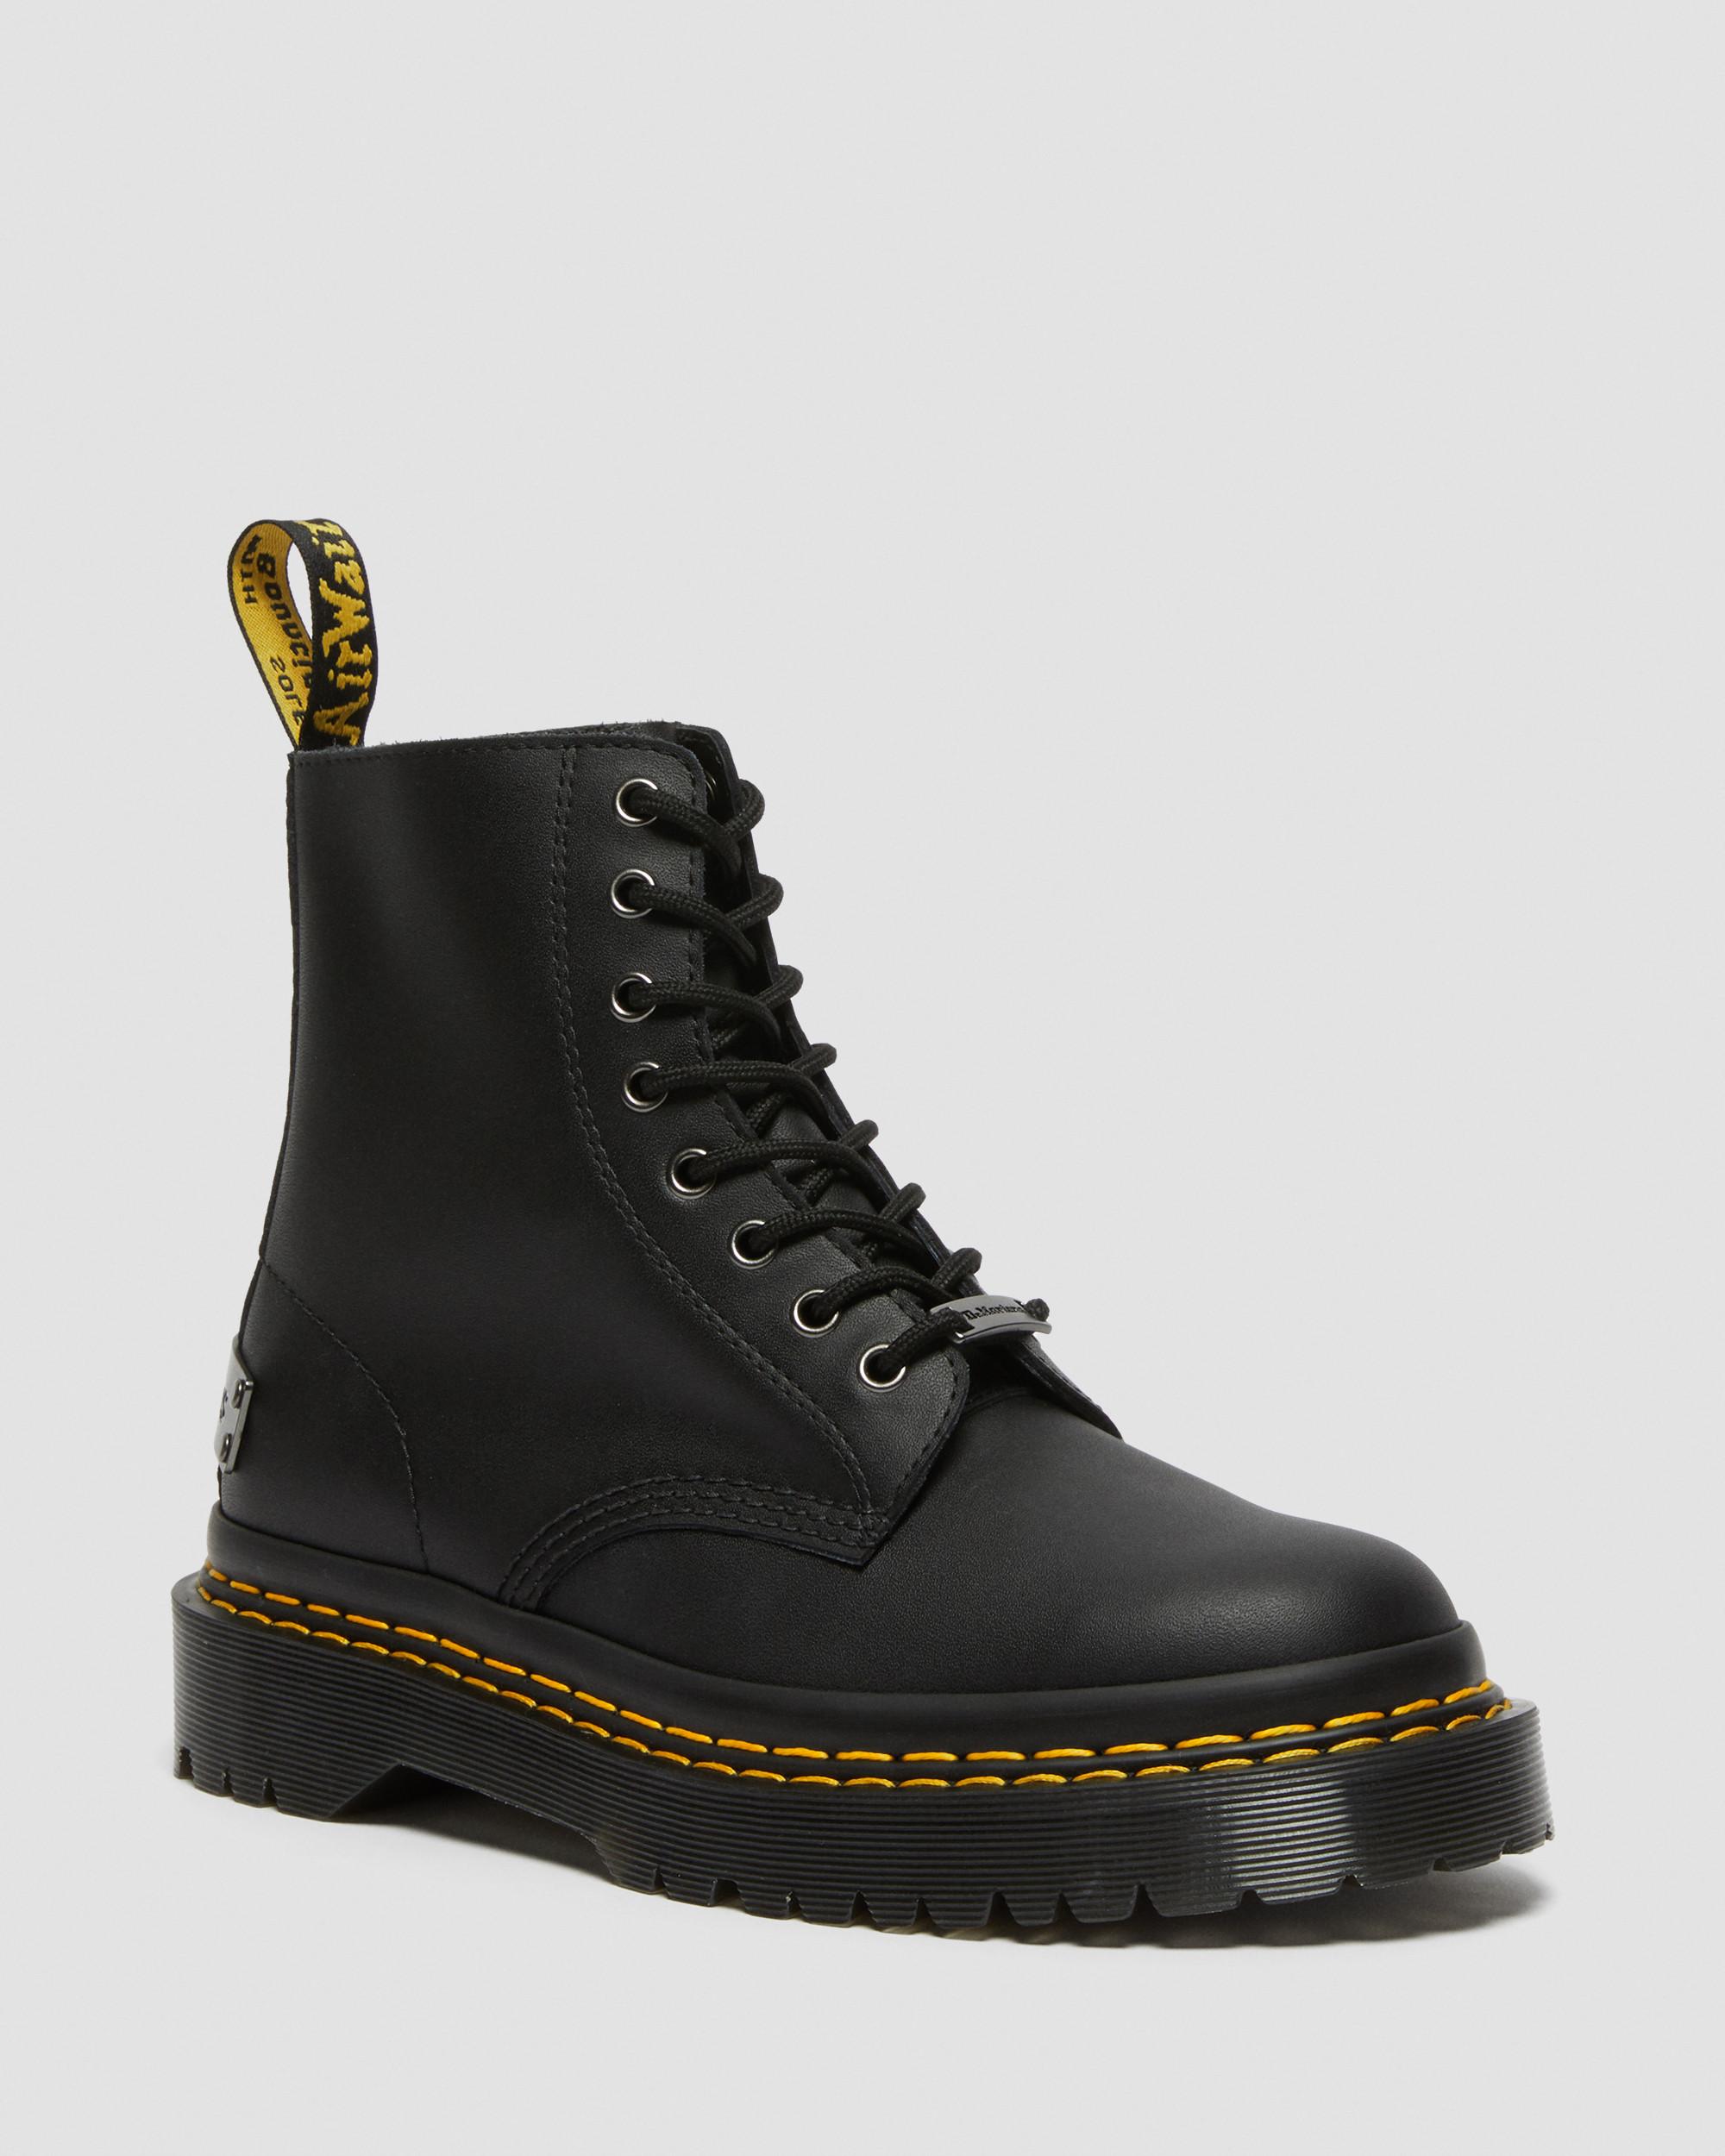 1460 Bex Double Stitch Leather Boots, Black | Dr. Martens